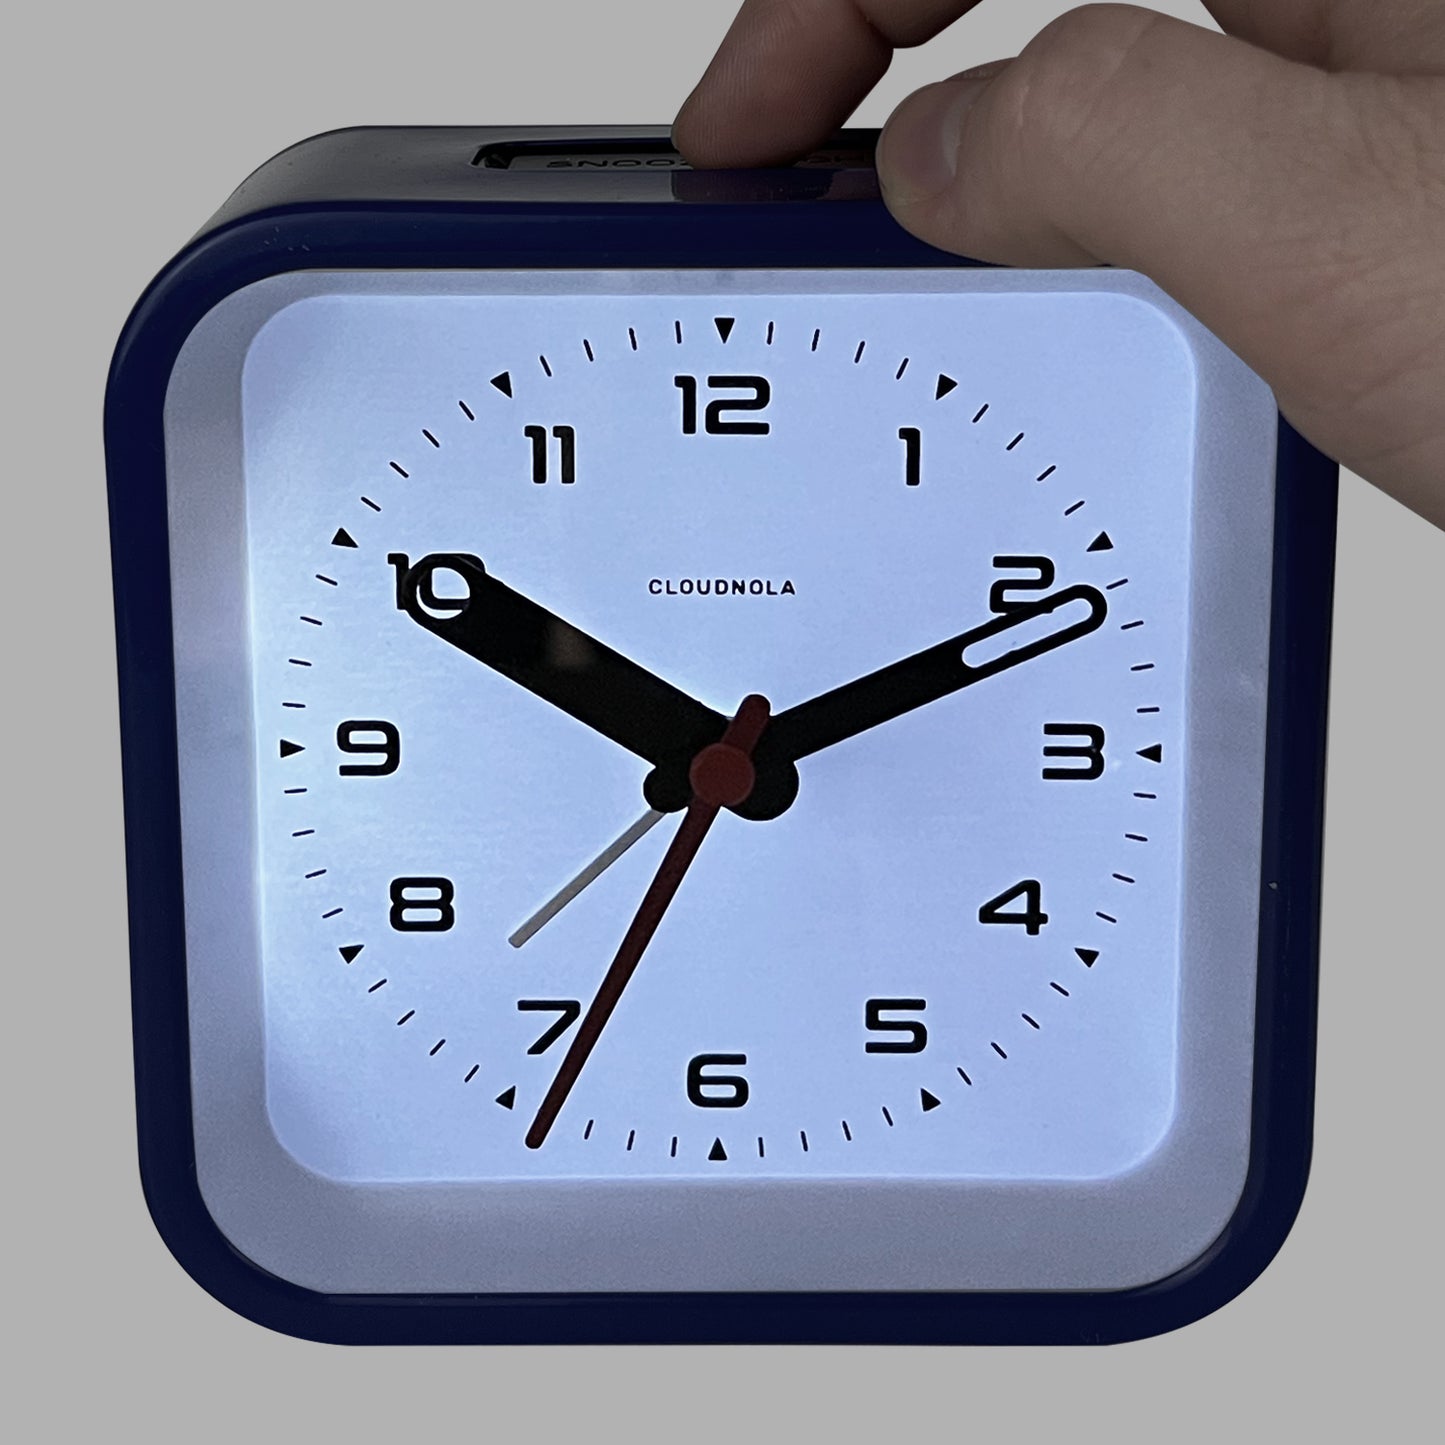 Railway Blue Alarm Clock - Square, Silent, LED Light - Modern Precision